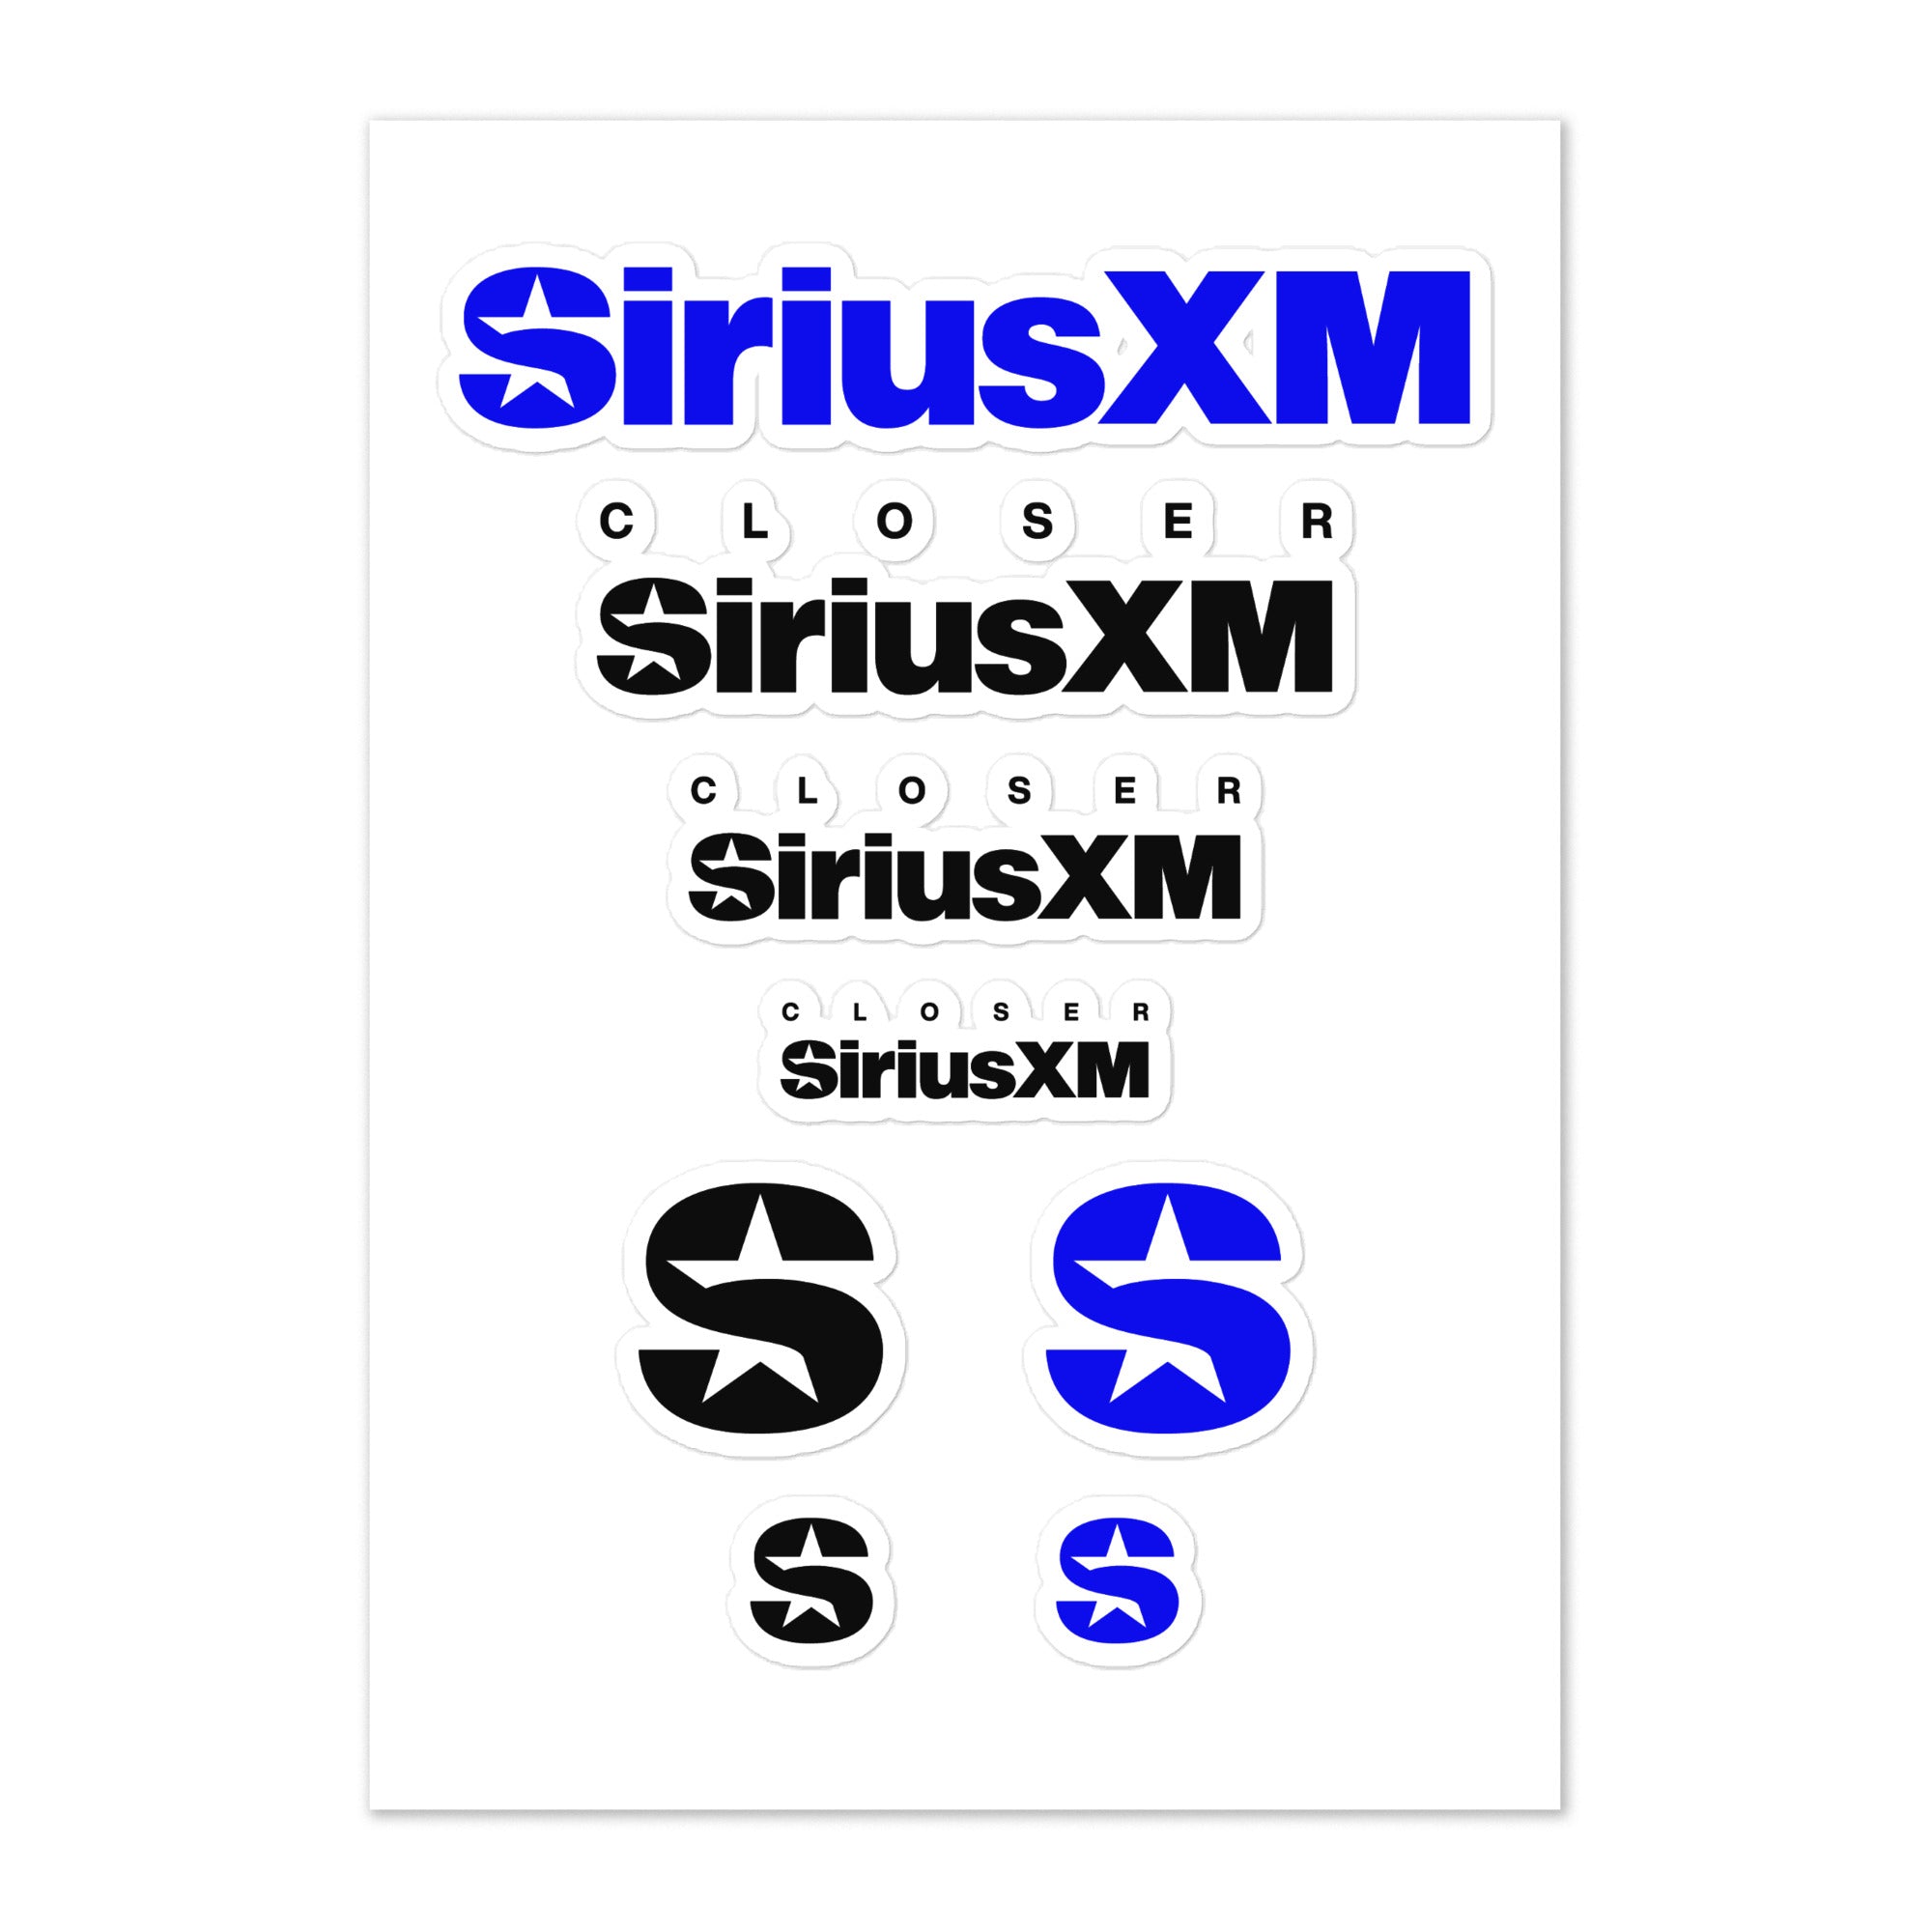 SiriusXM Closer: Classic Sticker Sheet